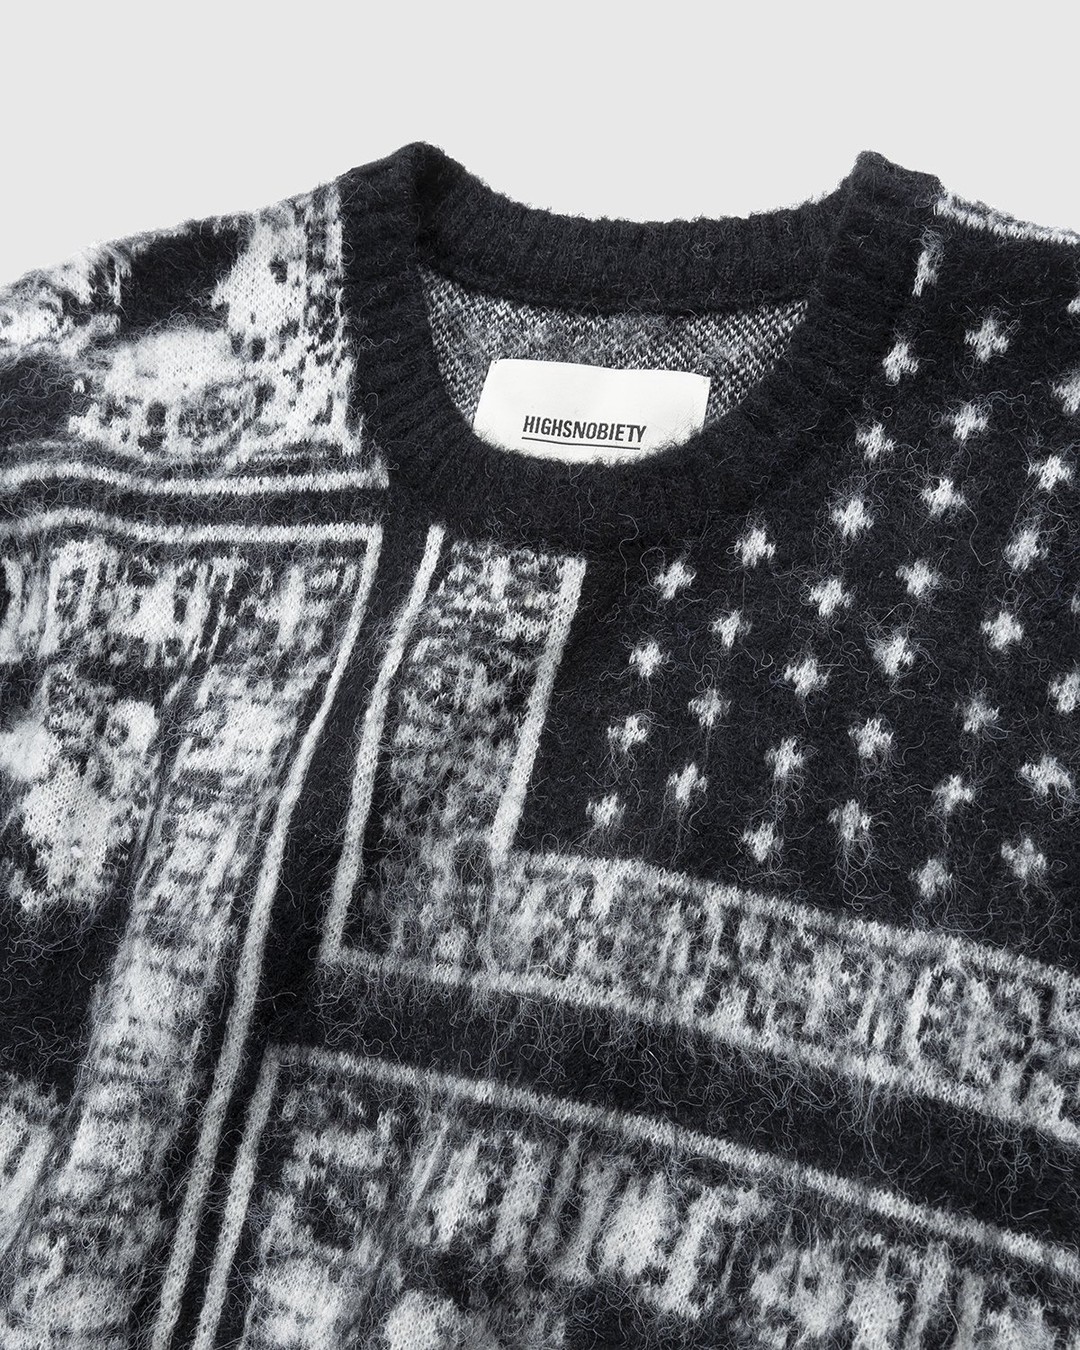 Highsnobiety – Bandana Alpaca Sweater Black - Knitwear - Black - Image 5